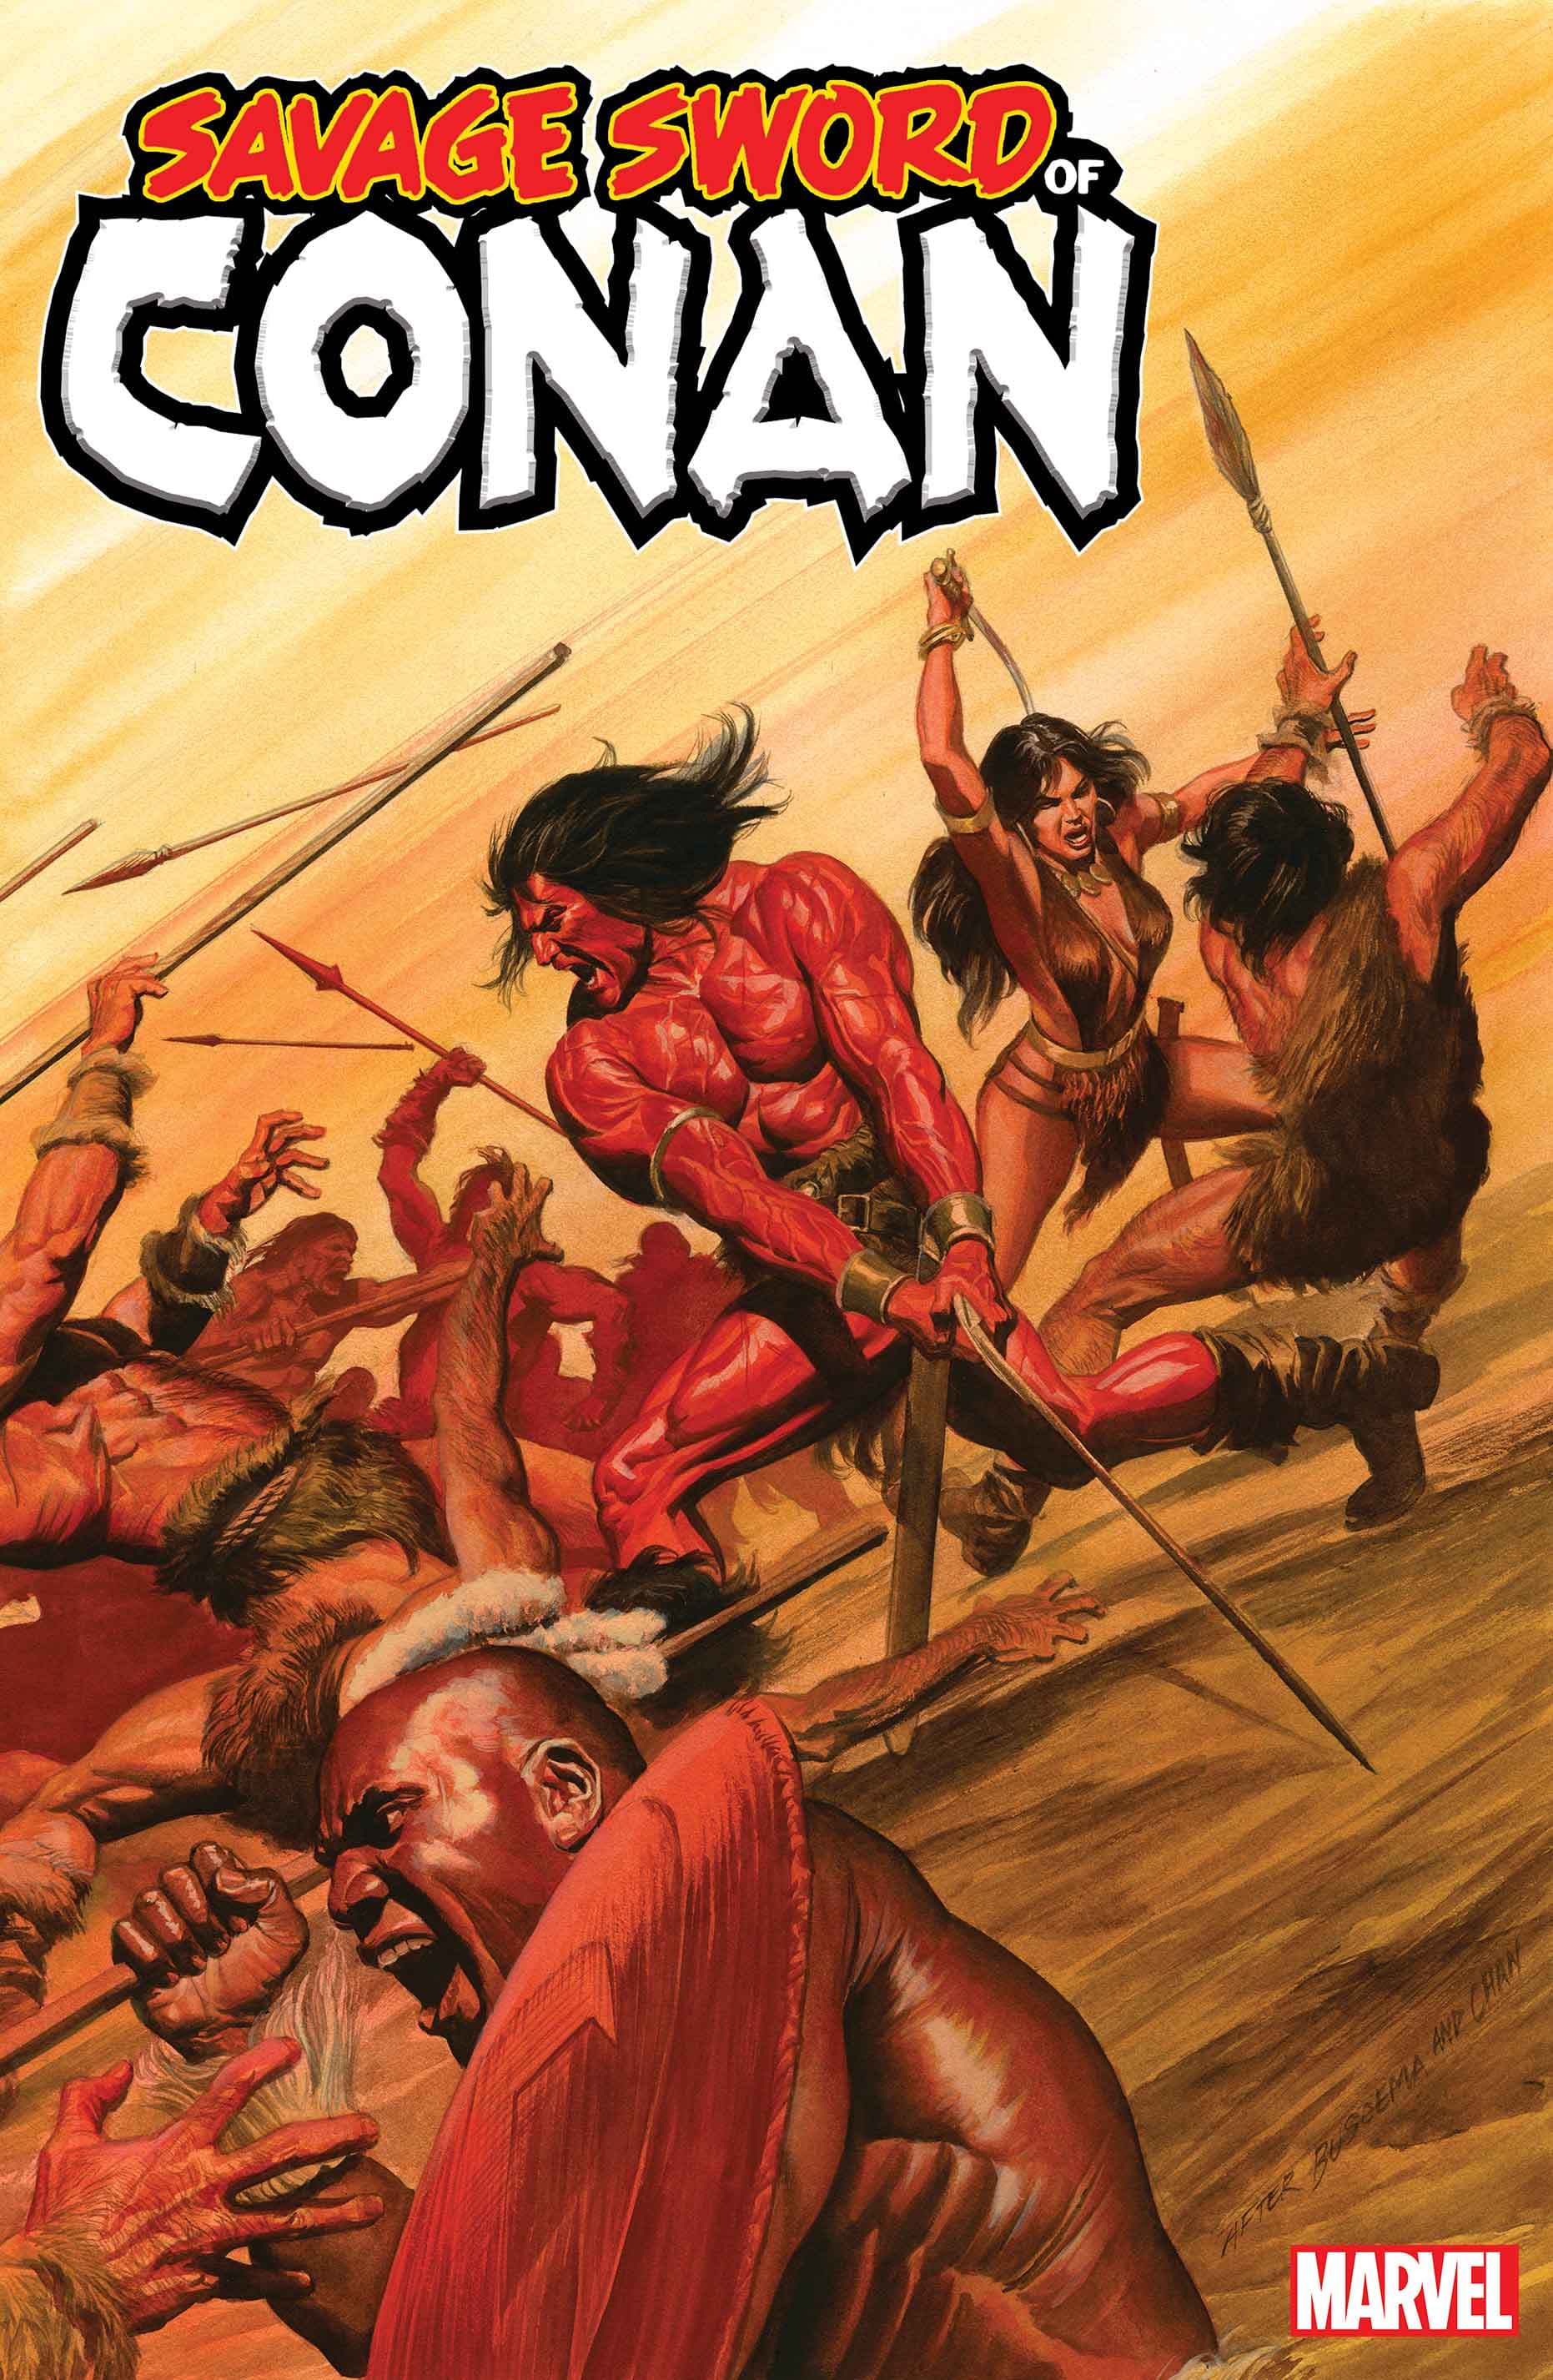 Savage Sword of Conan #3